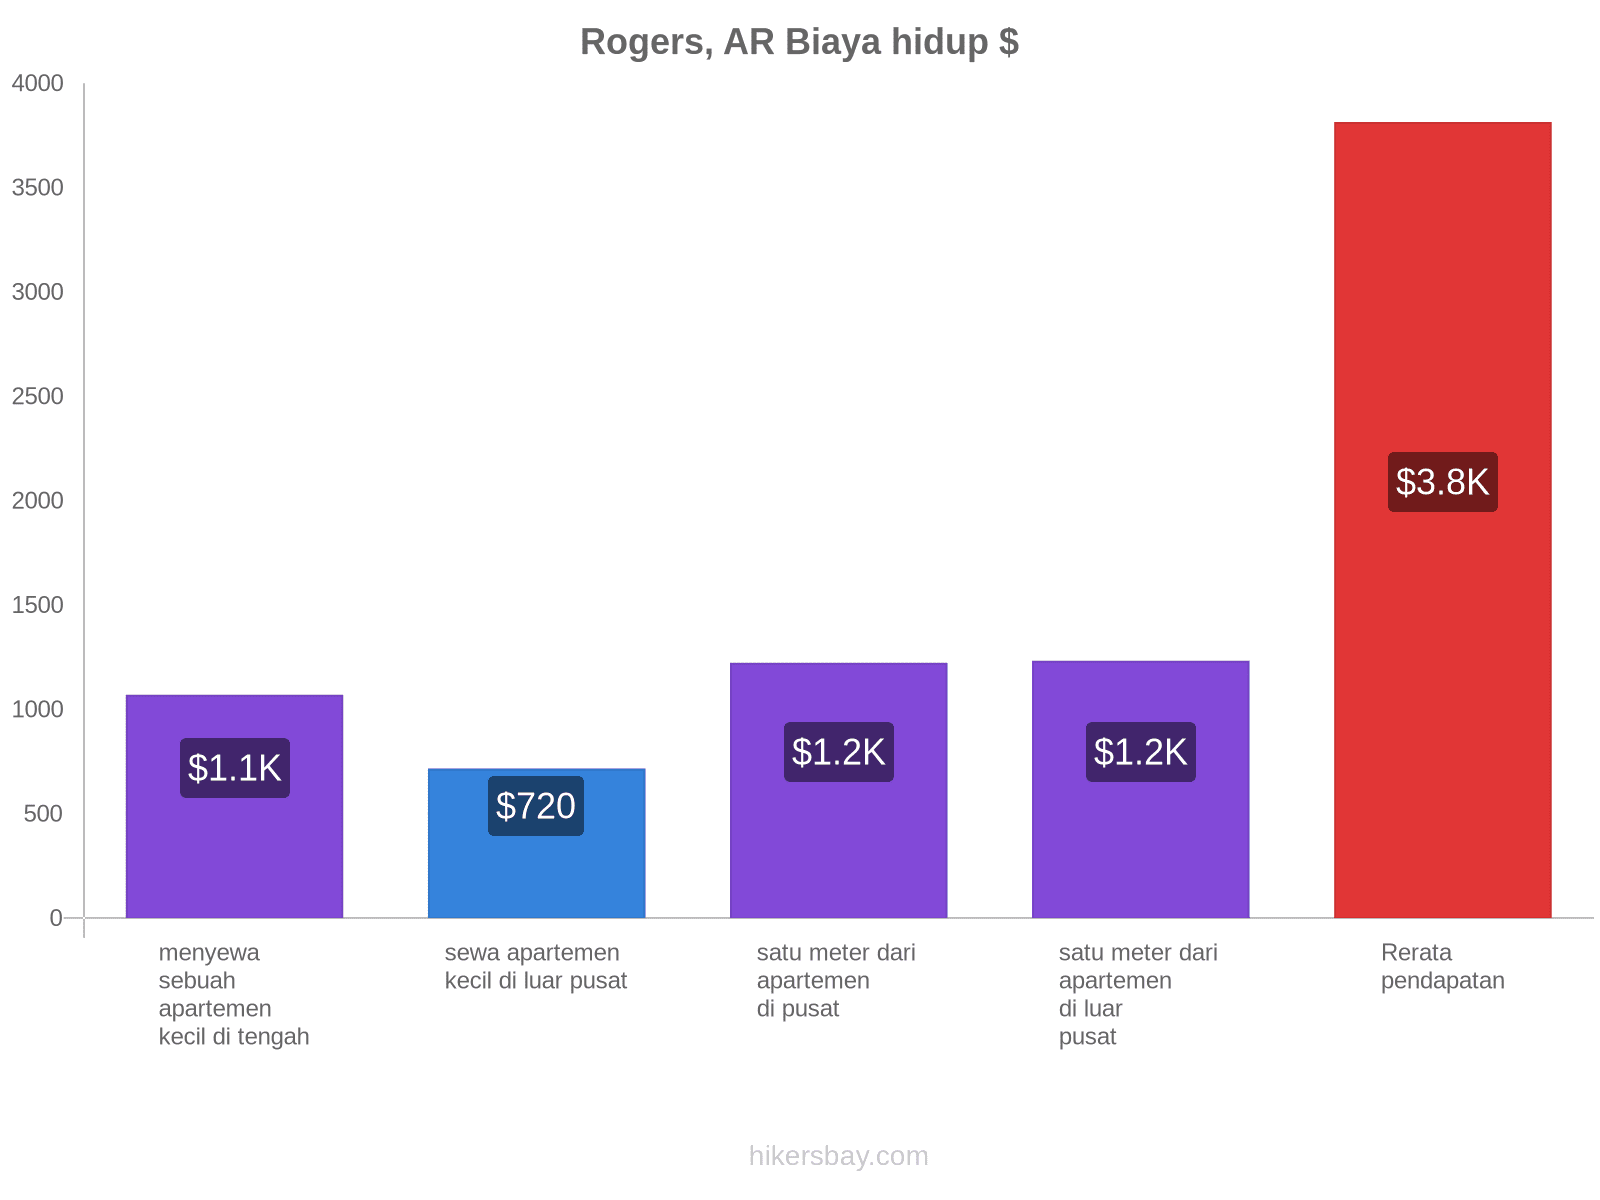 Rogers, AR biaya hidup hikersbay.com